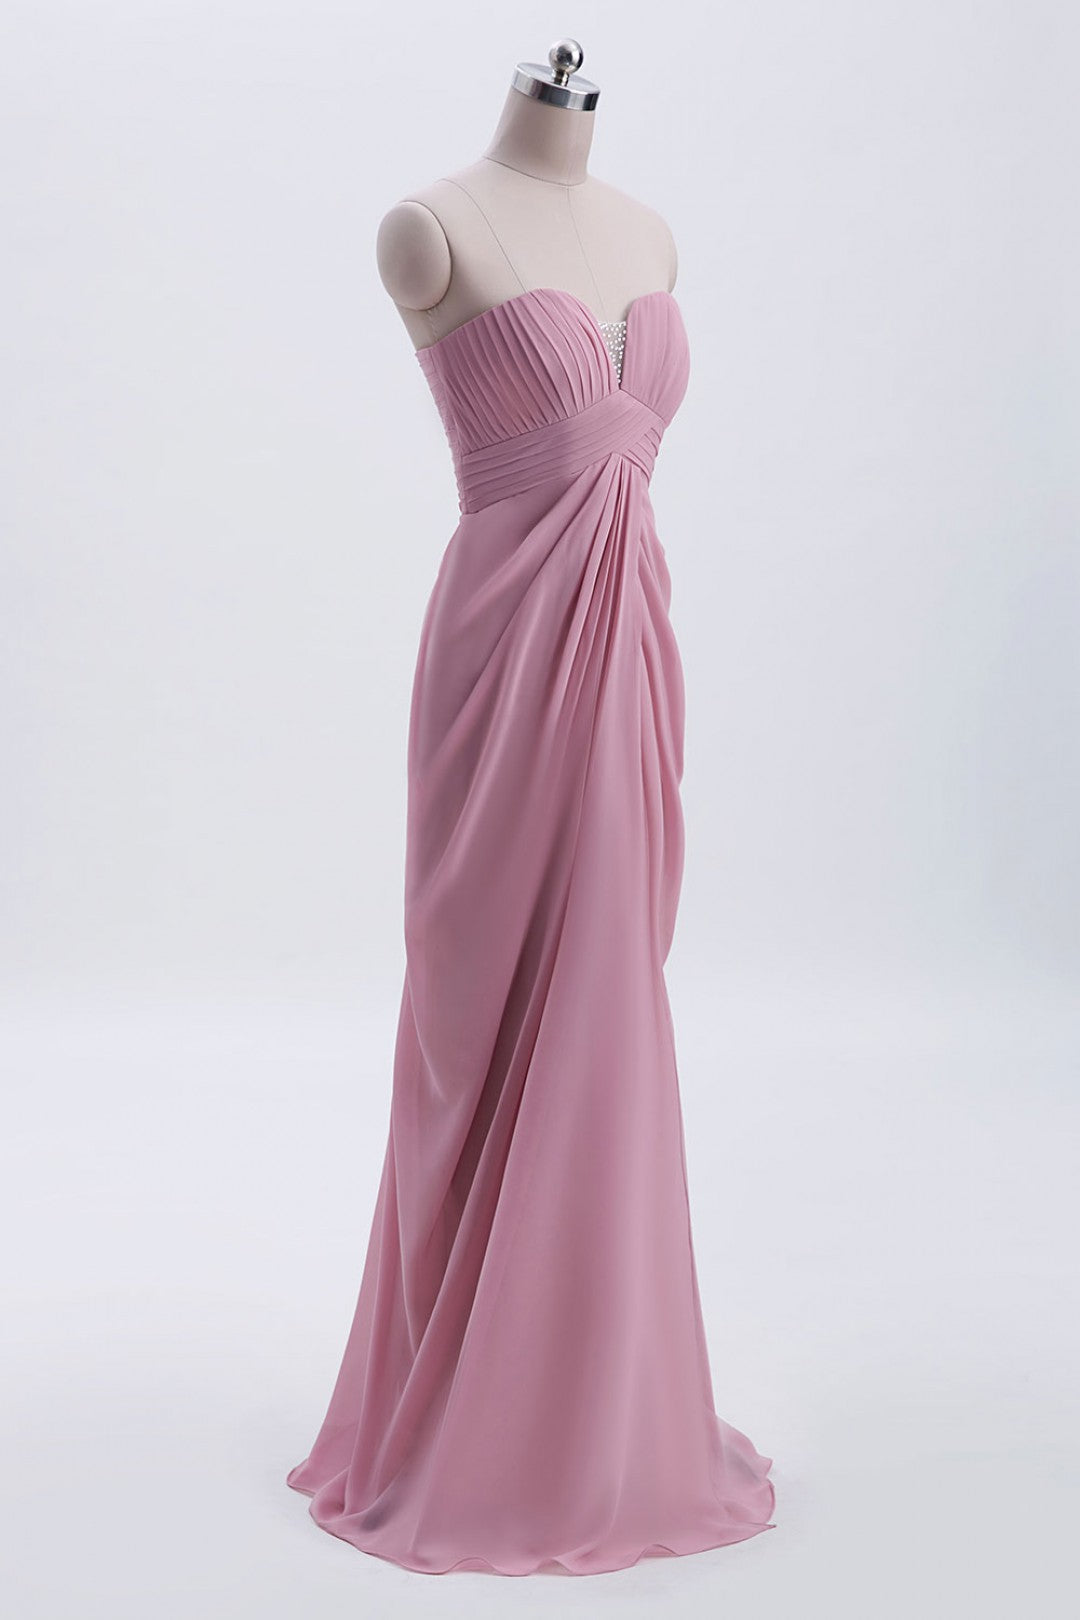 Strapless Blush Pink Draped High Waist Long Bridesmaid Dress